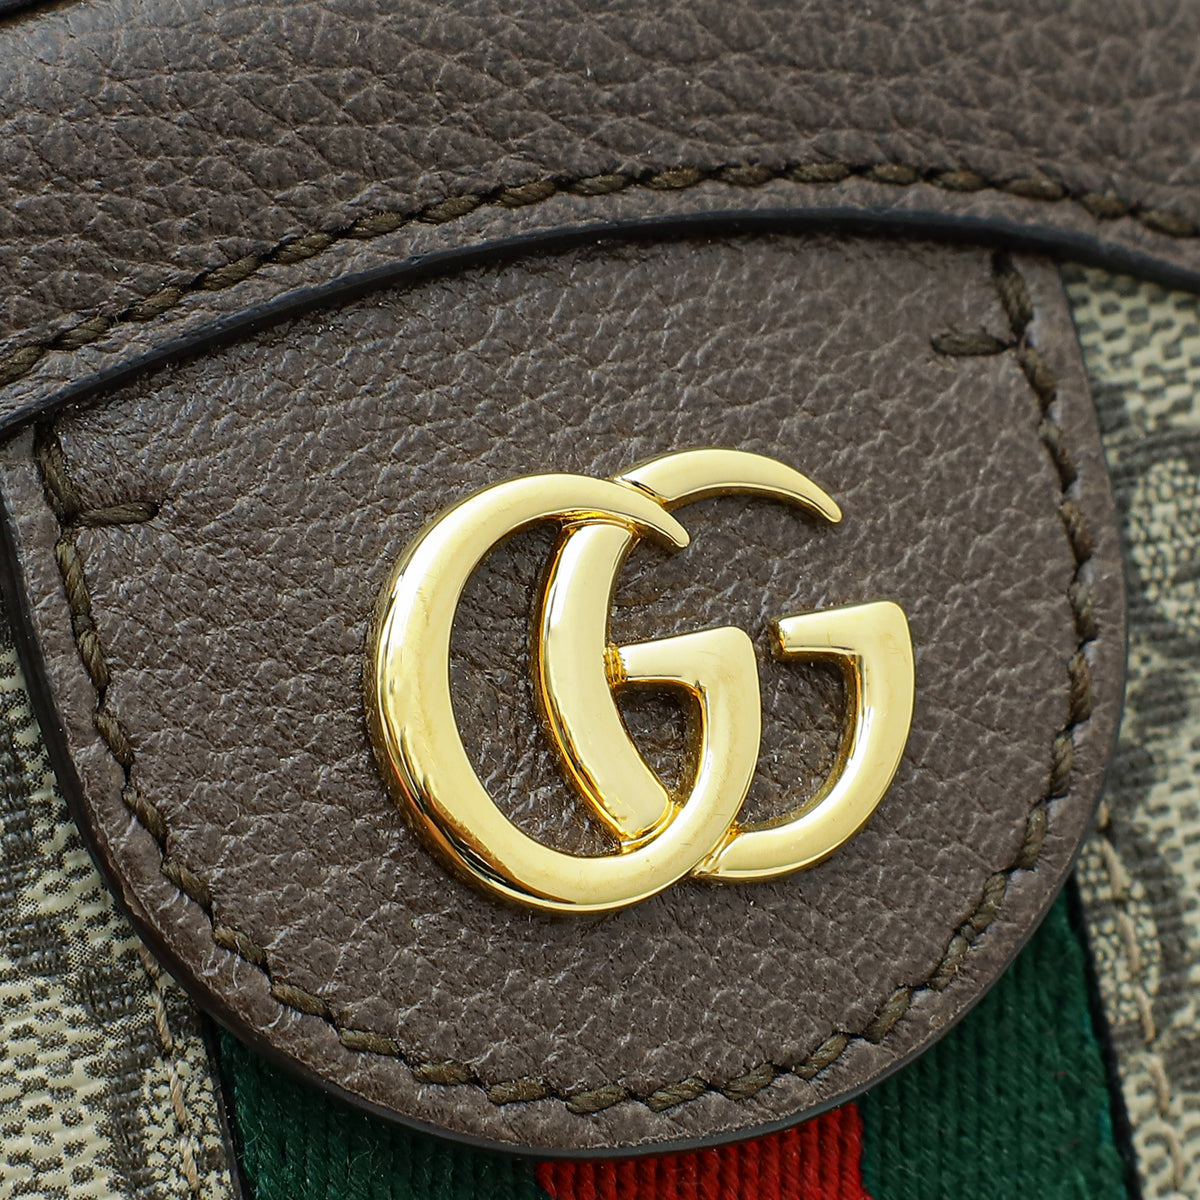 Gucci Ebony GG Supreme Ophidia Round Mini Shoulder Bag